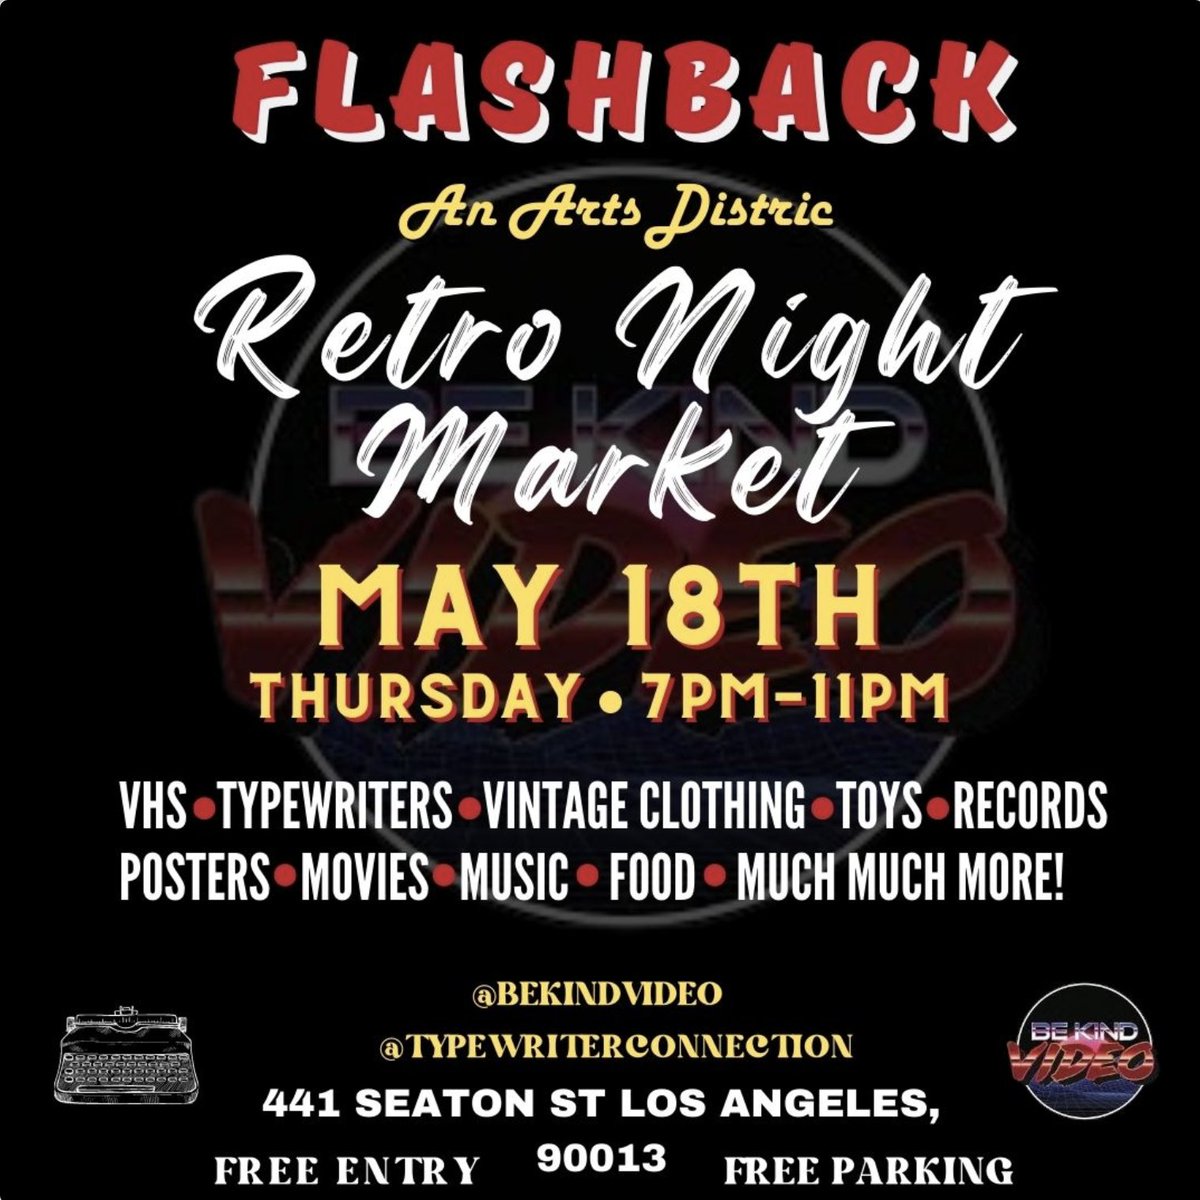 TONIGHT! You want Retro? We've got it! #vhs #vinyl #typewriters #analog #posters #art #movies #film #losangeles #videostore #nightout #nightmarket #popup #DTLA #music #cookies